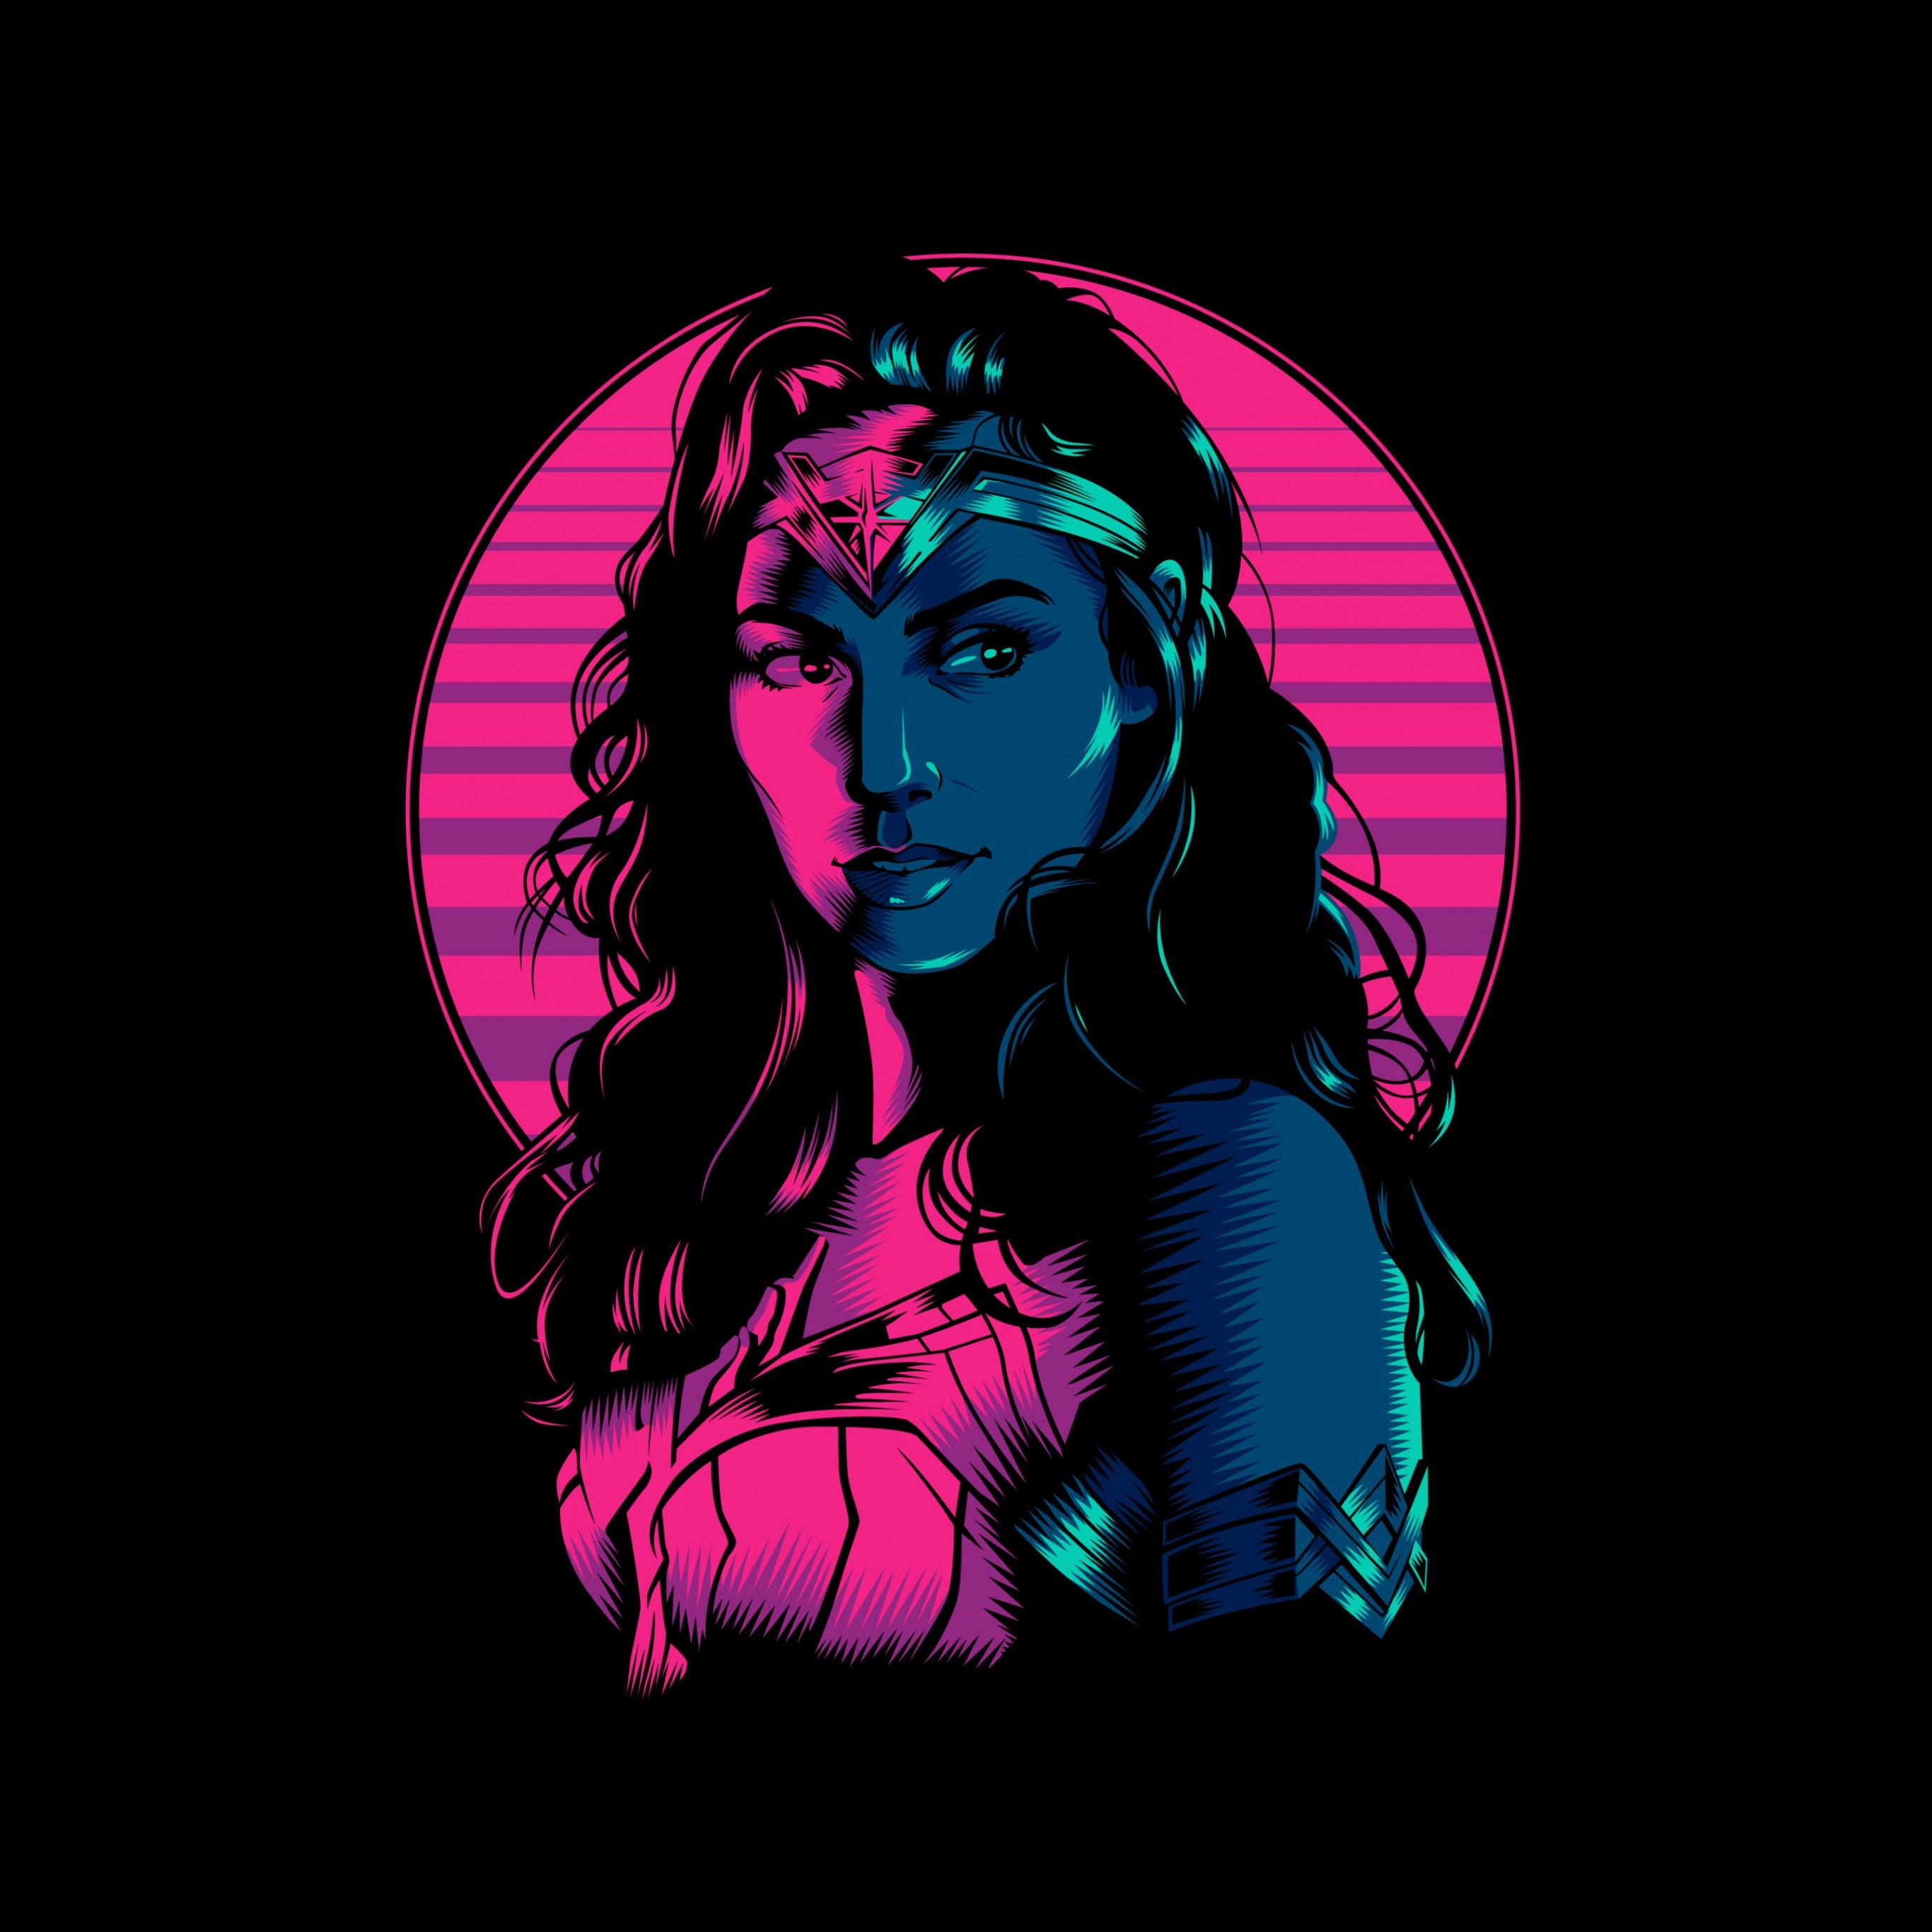 Wonder Woman 1984 4K Wallpaper, Wonder Woman, Fan art, Black background, Neon, 5K, Graphics CGI